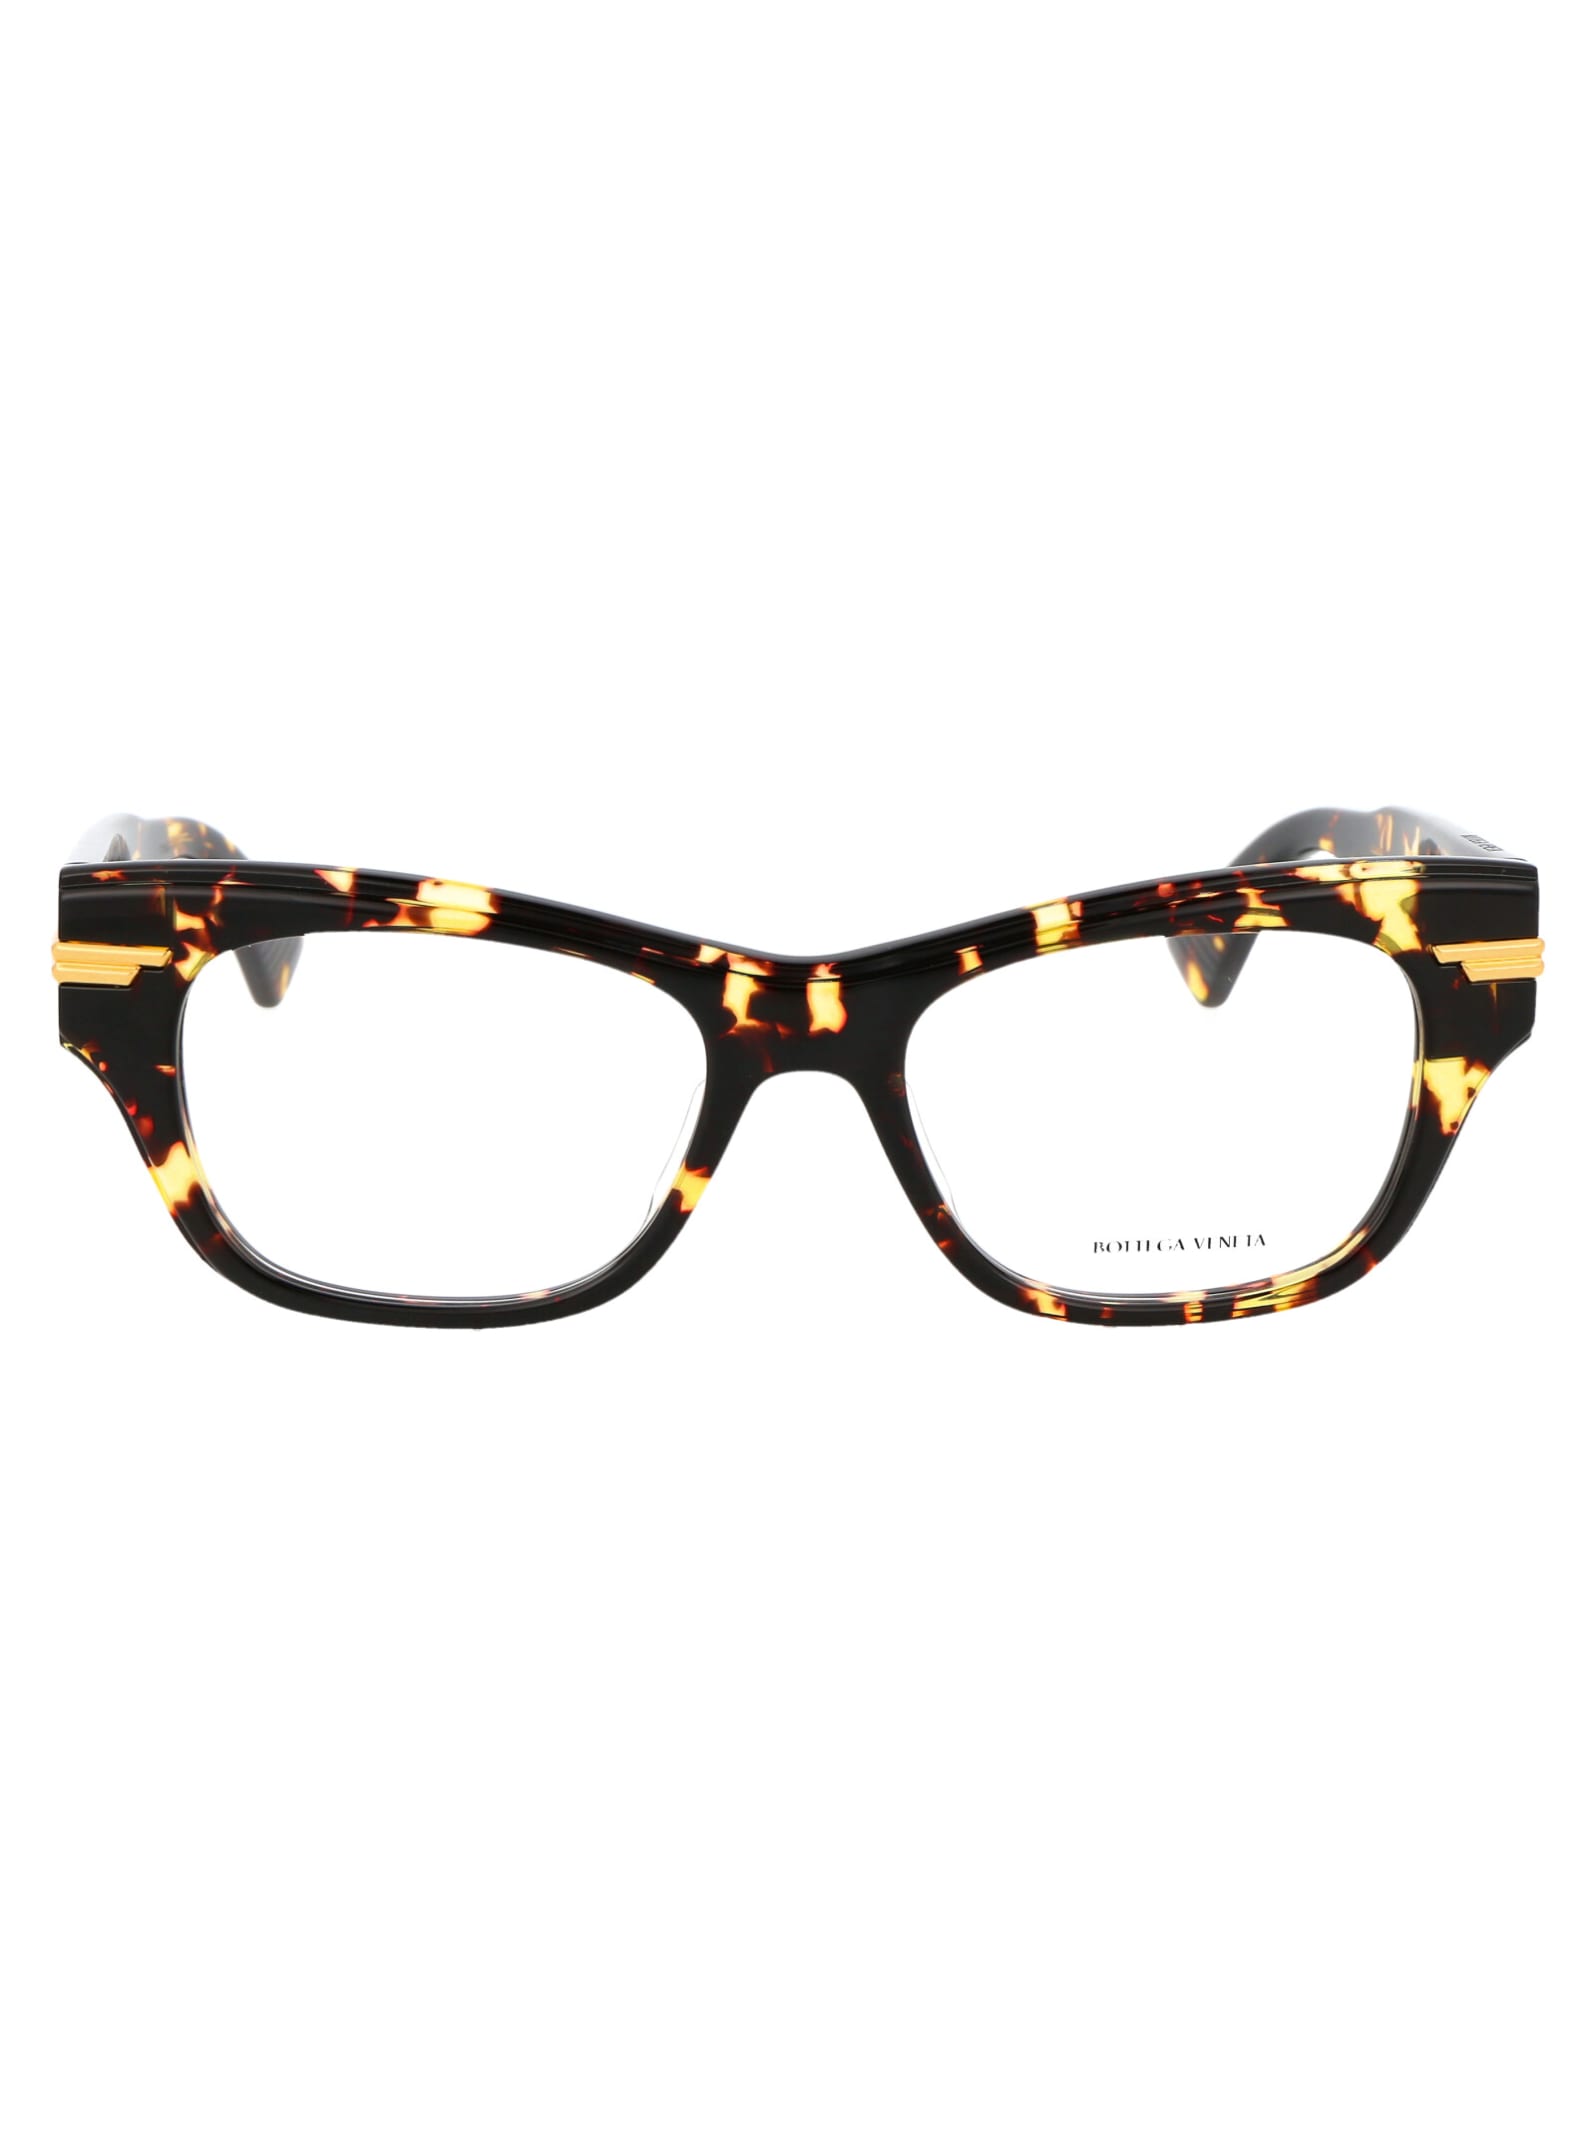 Bottega Veneta Eyewear Bv1152o Glasses